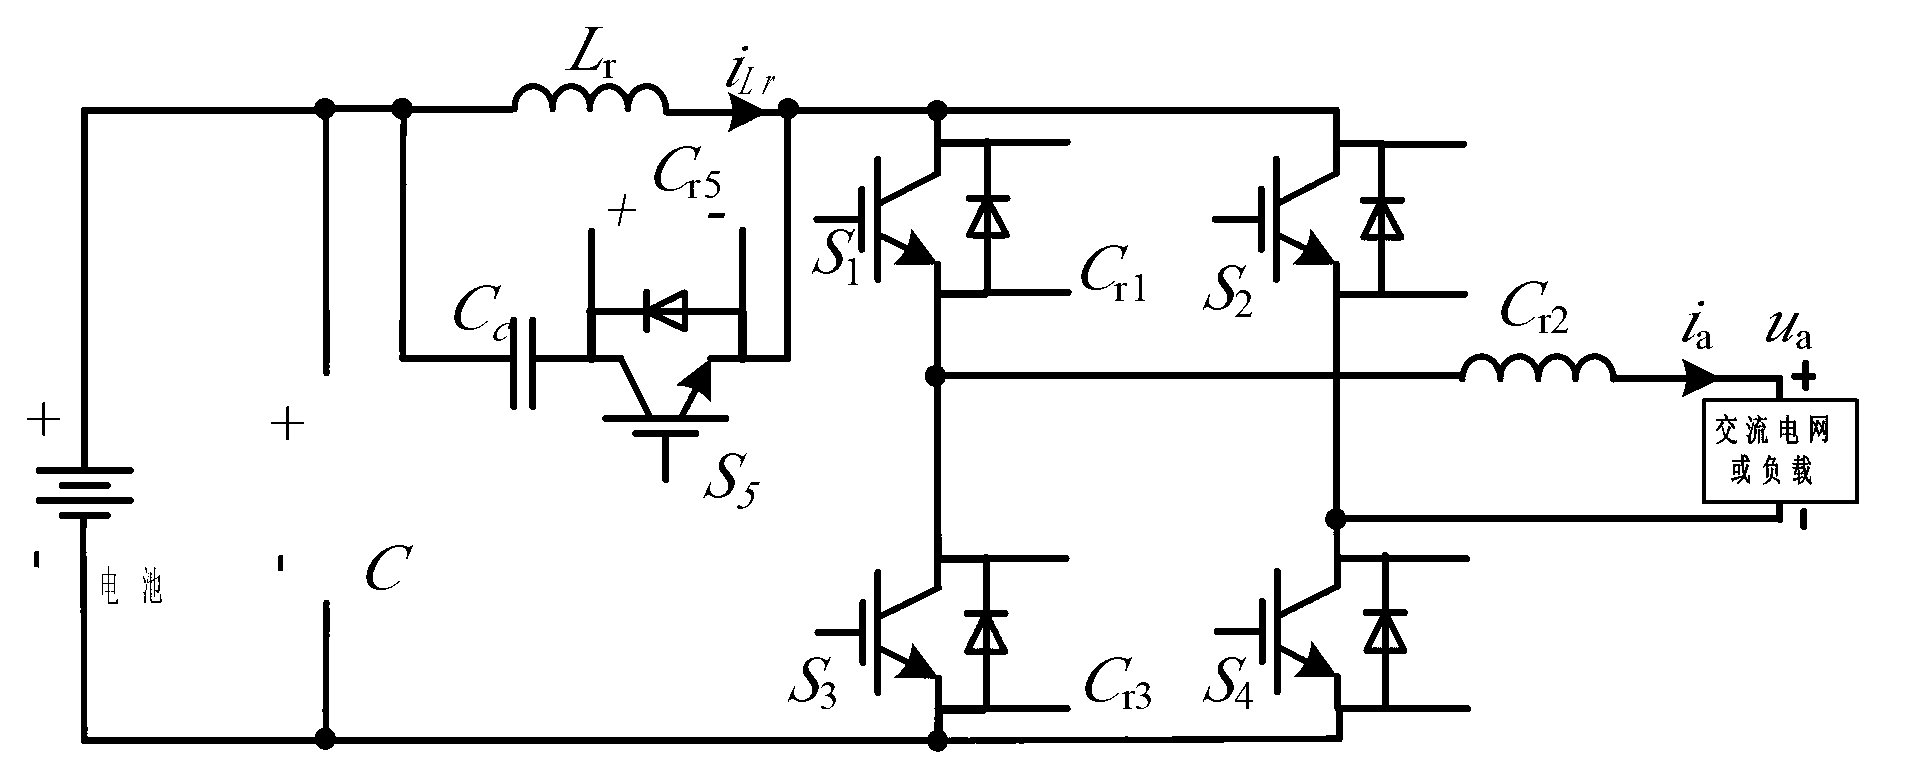 Low-additional-voltage zero-voltage switch energy storage bridge type inverter and modulation method